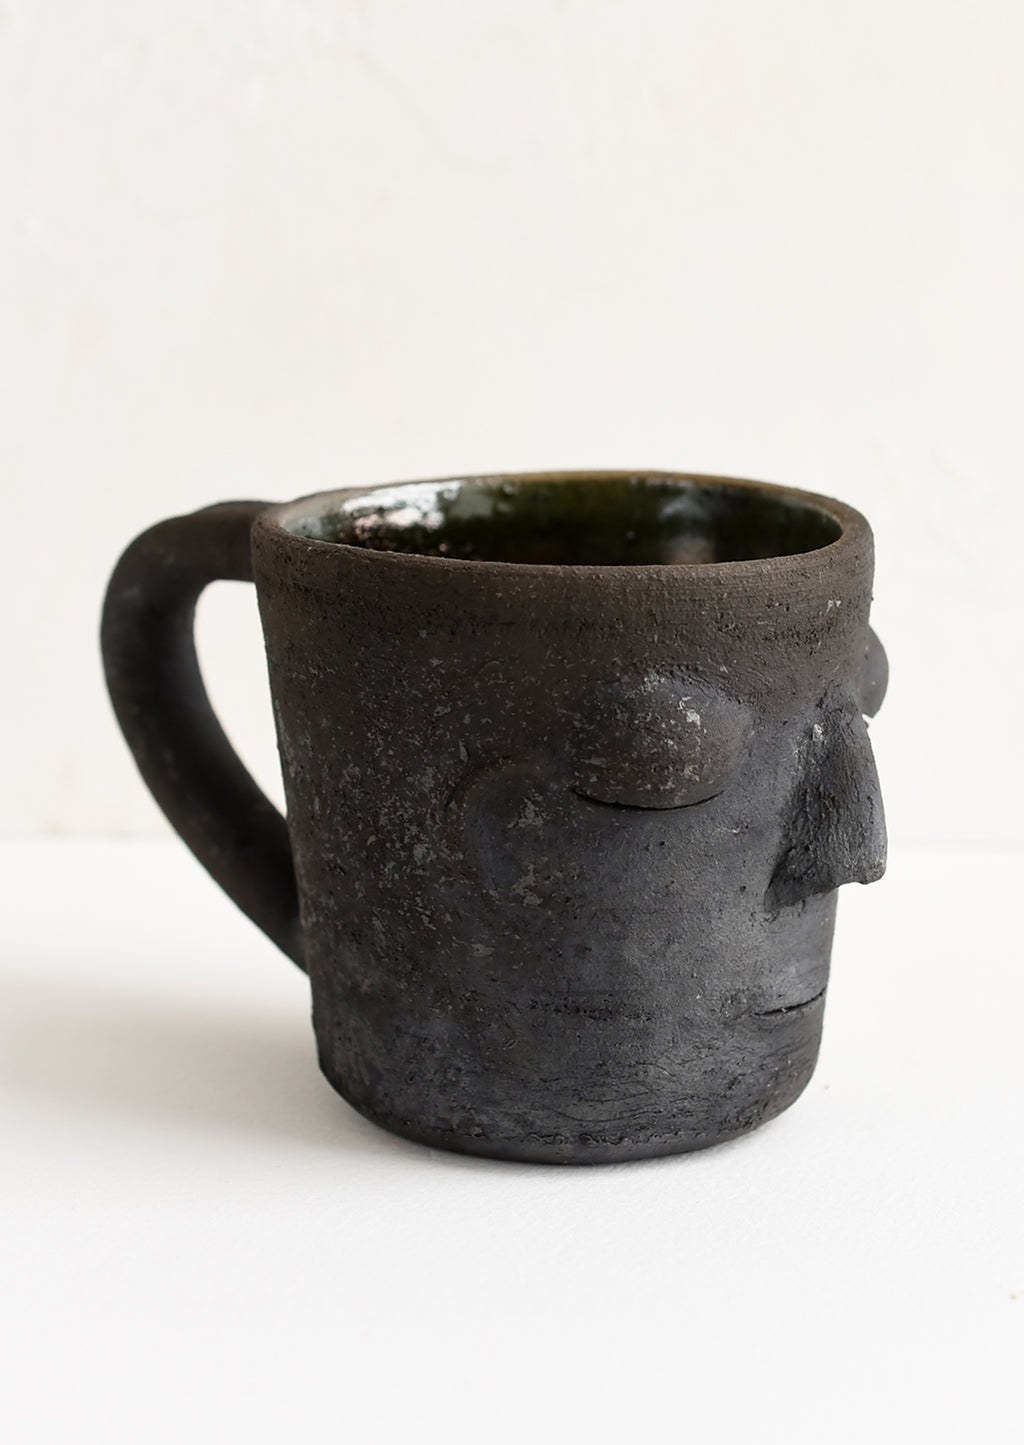 Black: A clay mug in matte black color in face shape.